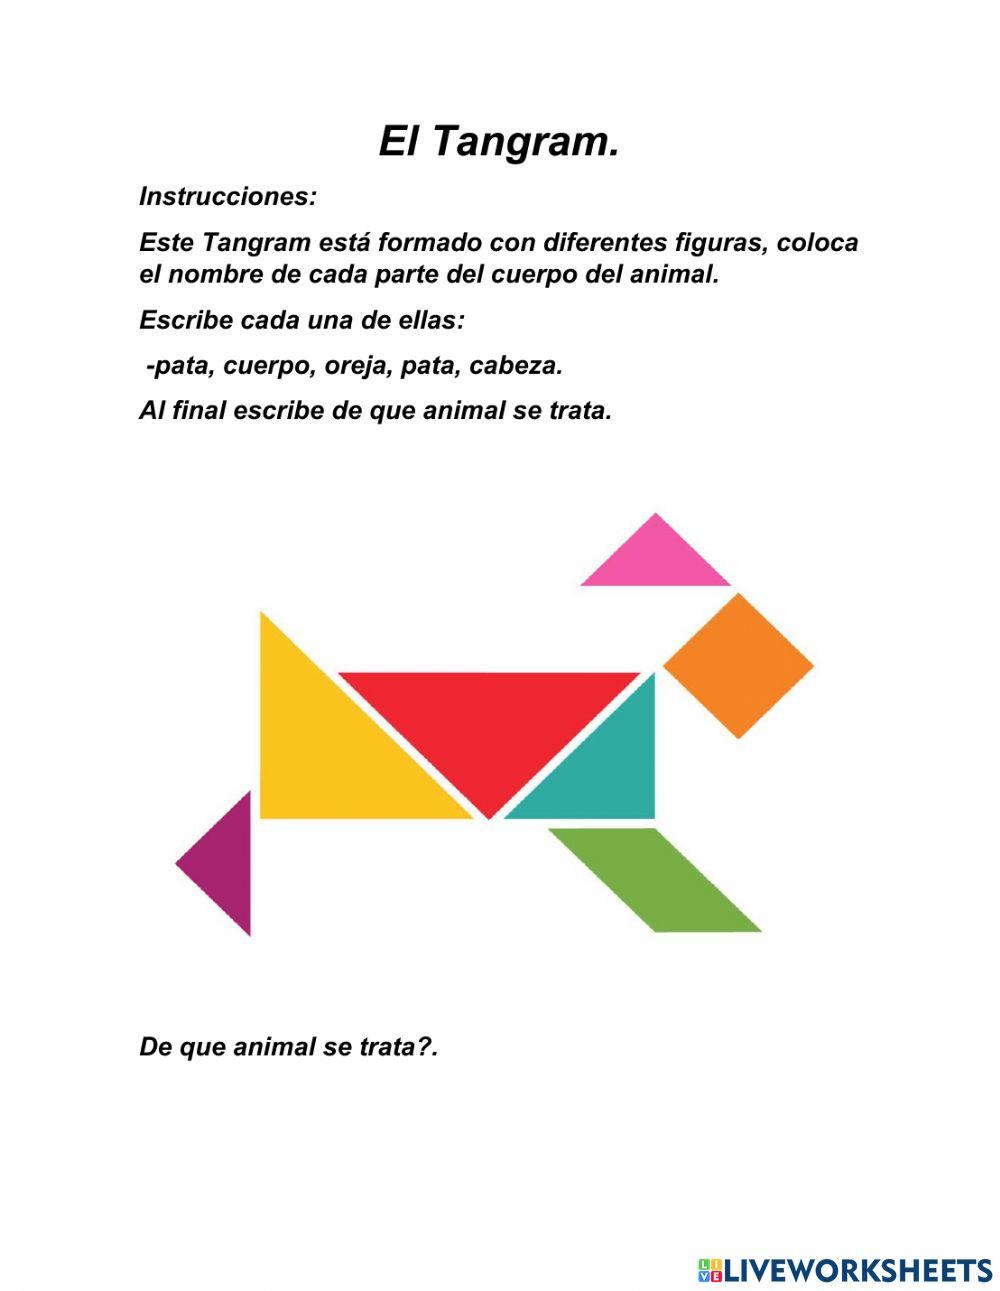 El tangram activity | Live Worksheets